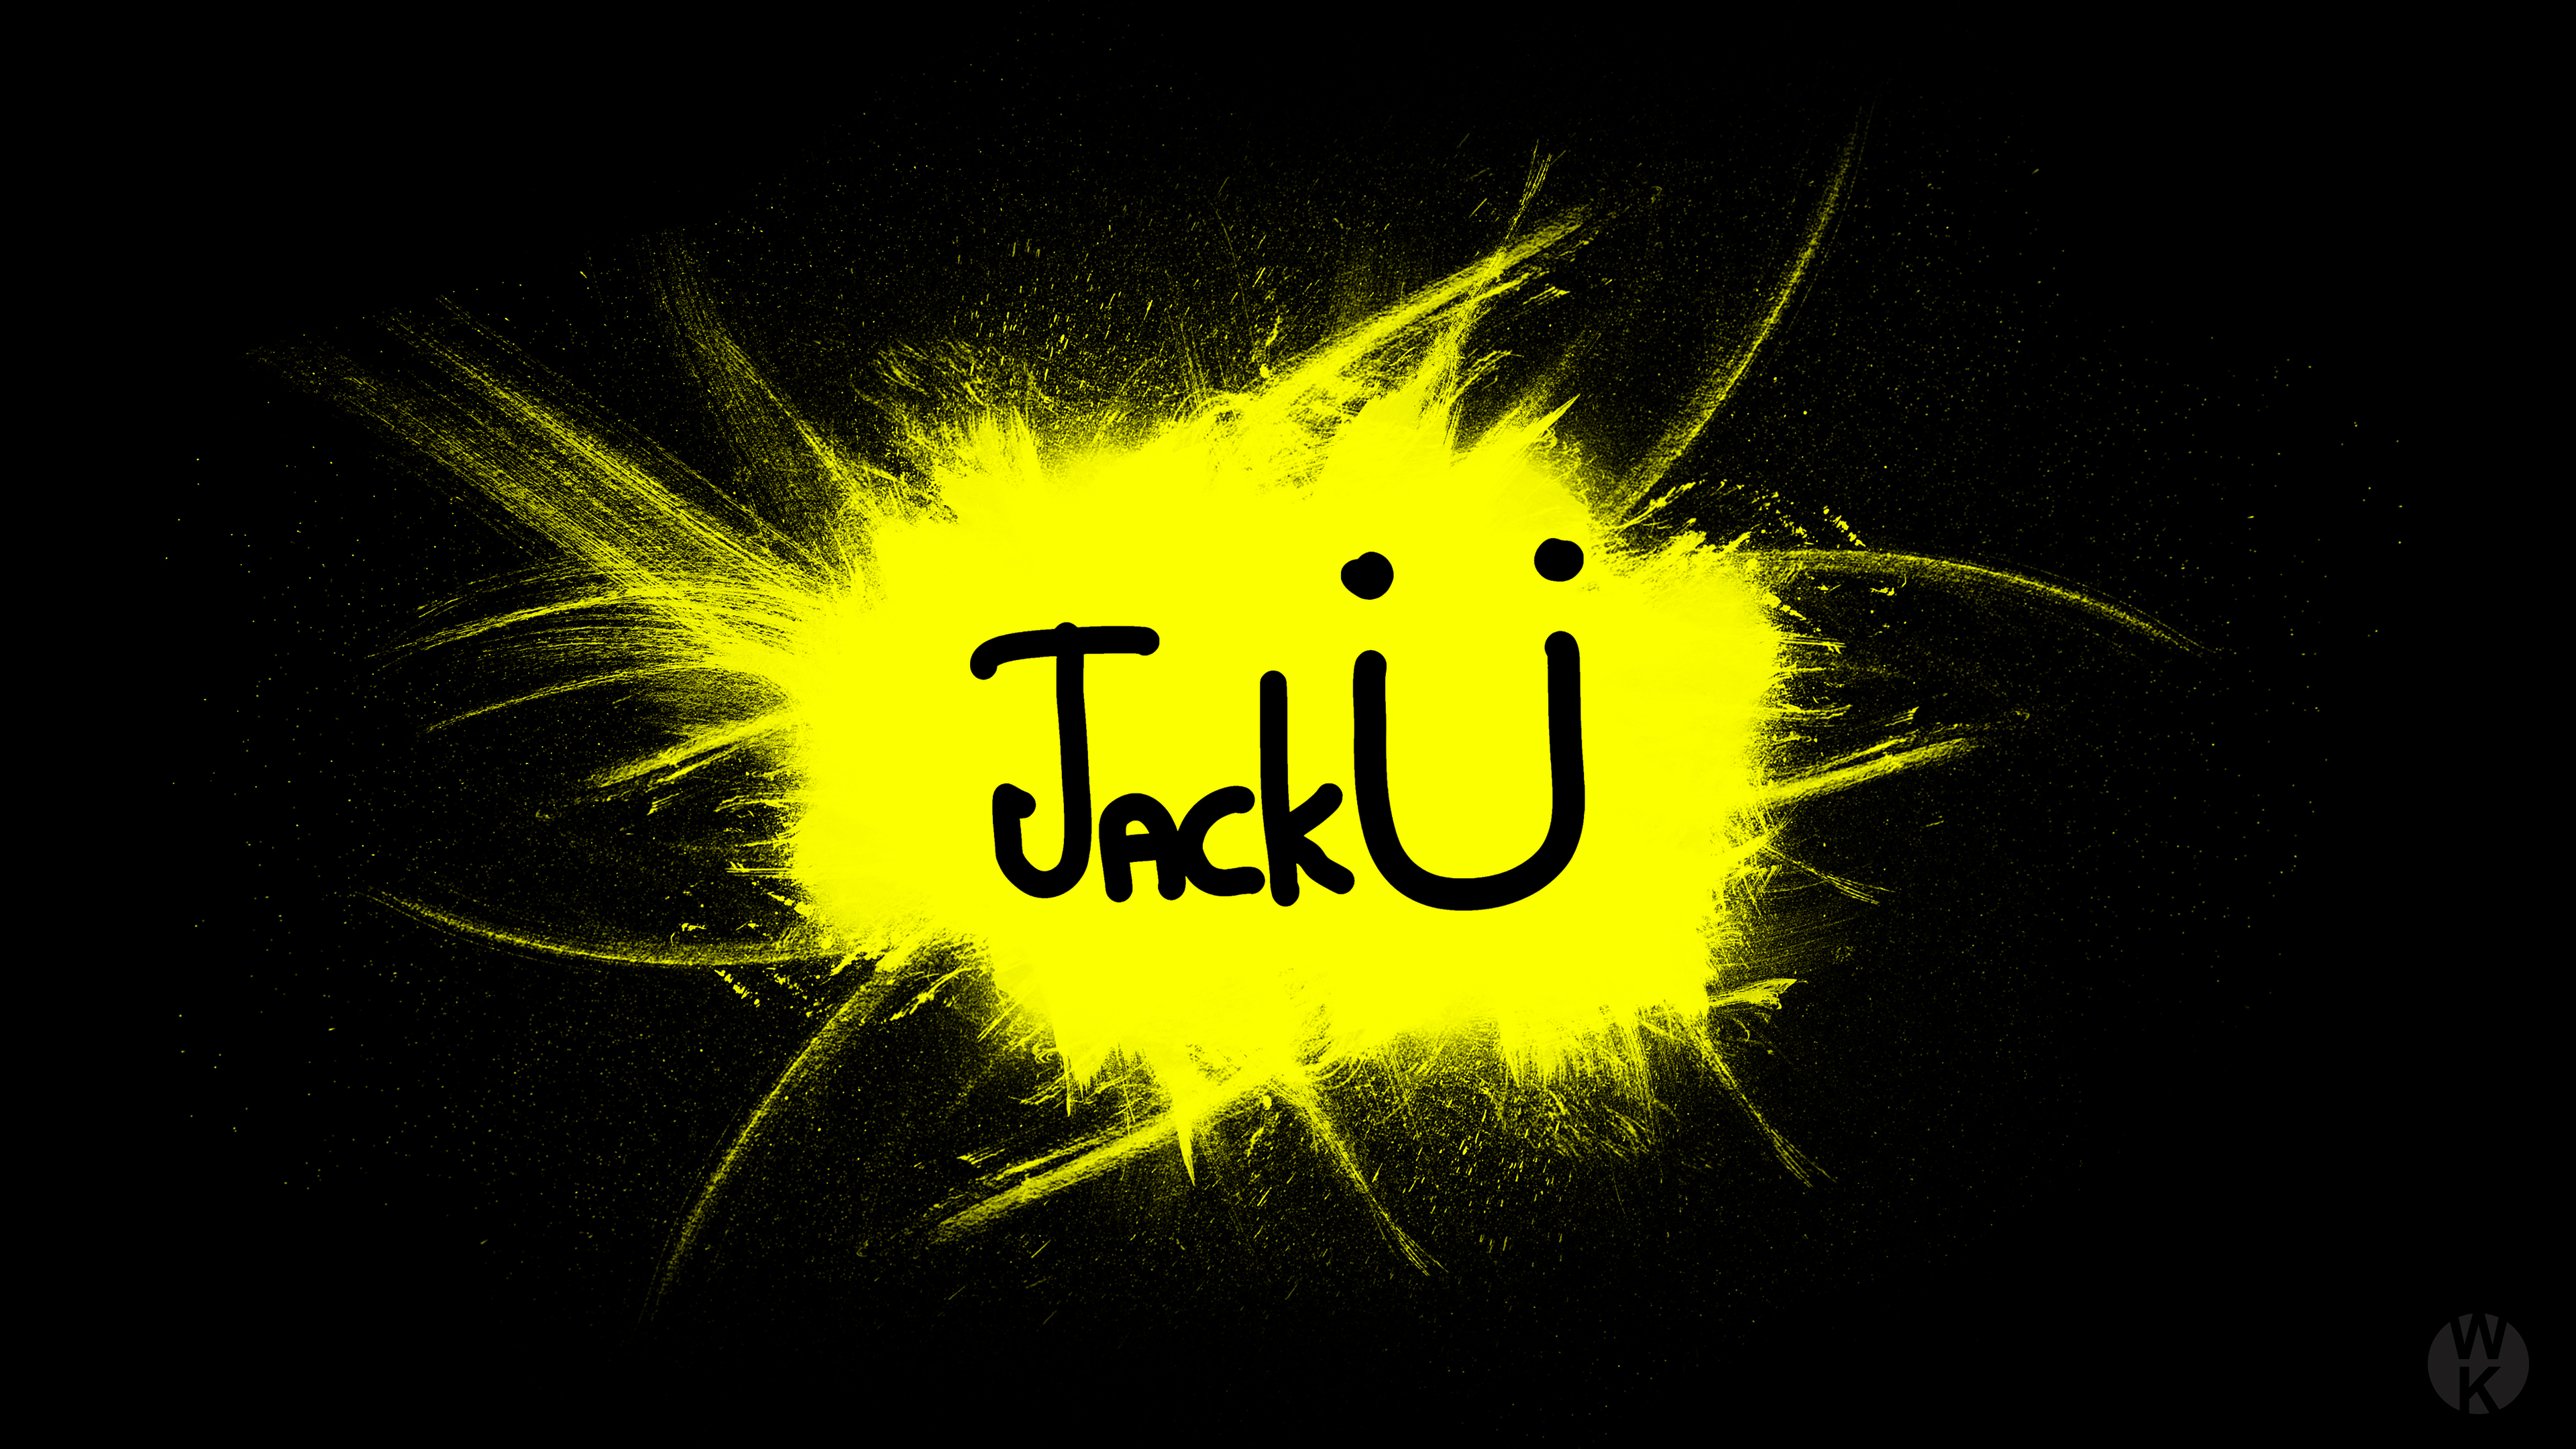 Jack 4k Ultra HD Wallpaper Background Image Id